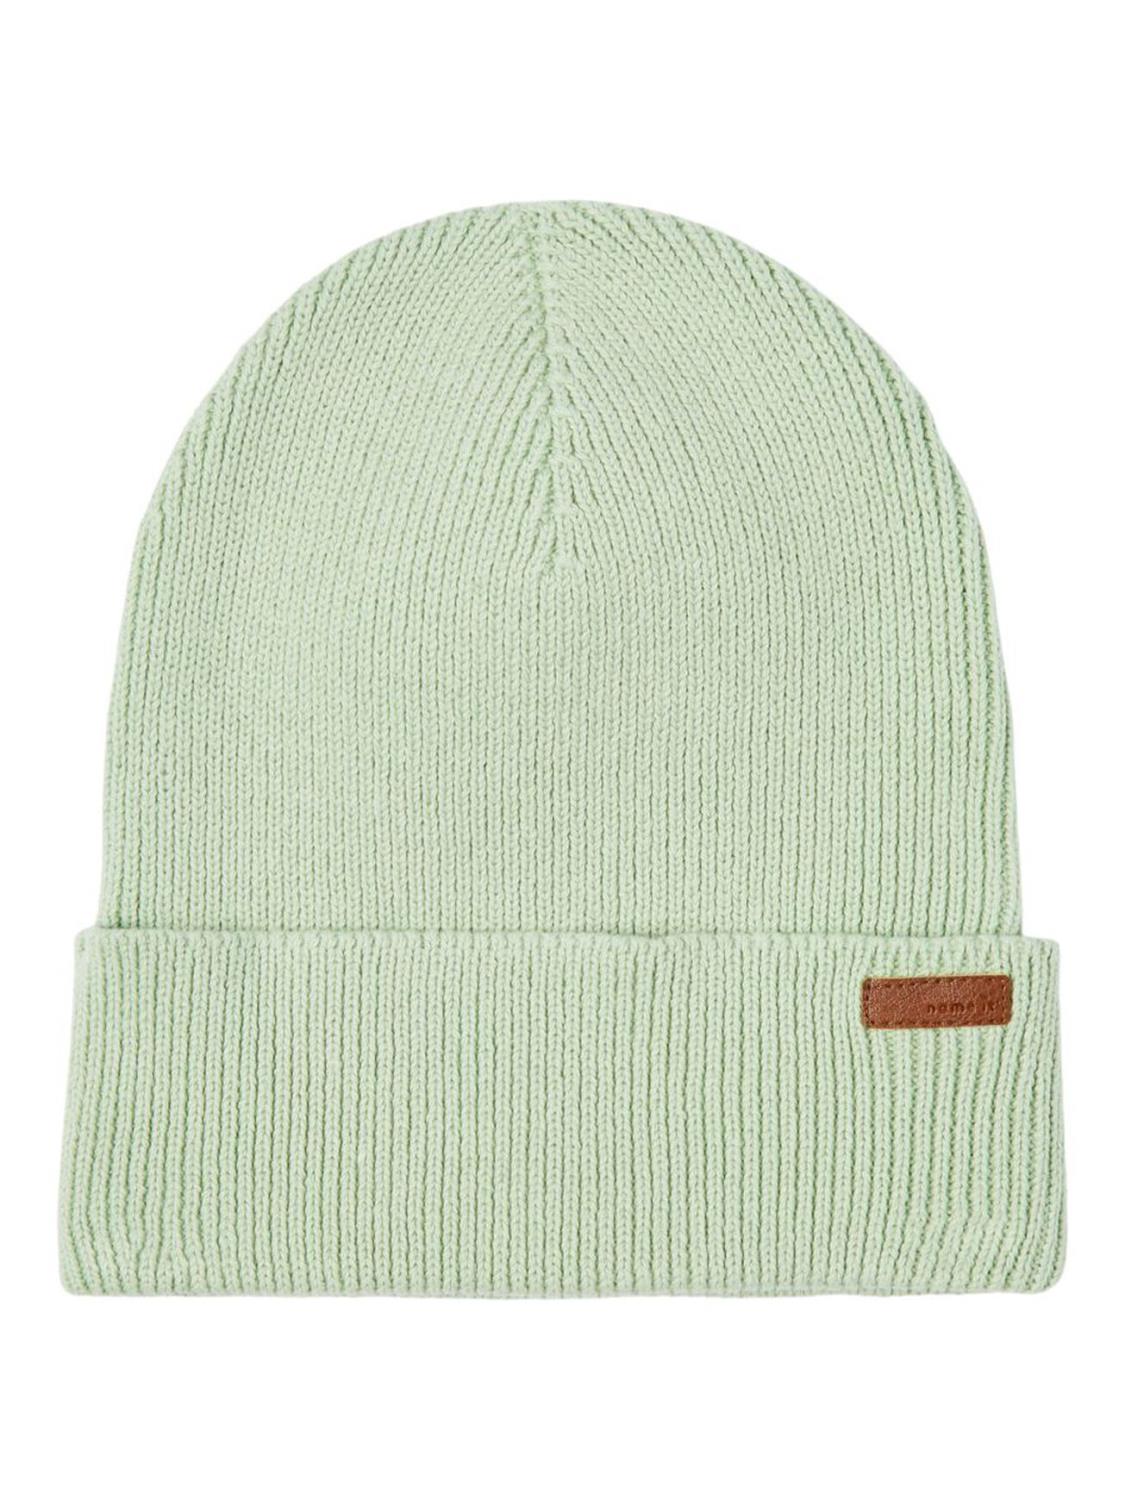 Beran Knit Hat - Subtle Green